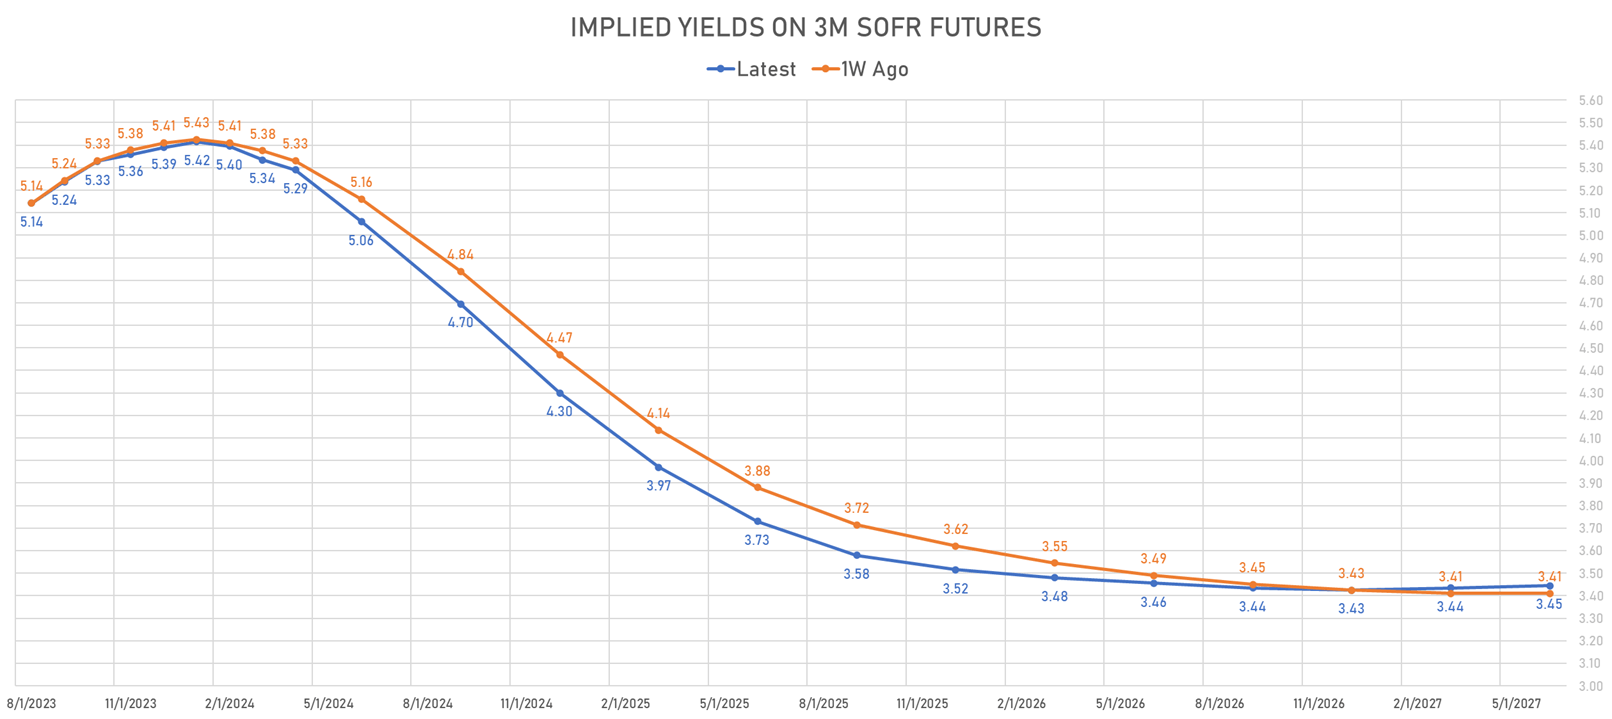 3M USD SOFR Futures Implied Yields | Sources: phipost.com, Refinitiv data